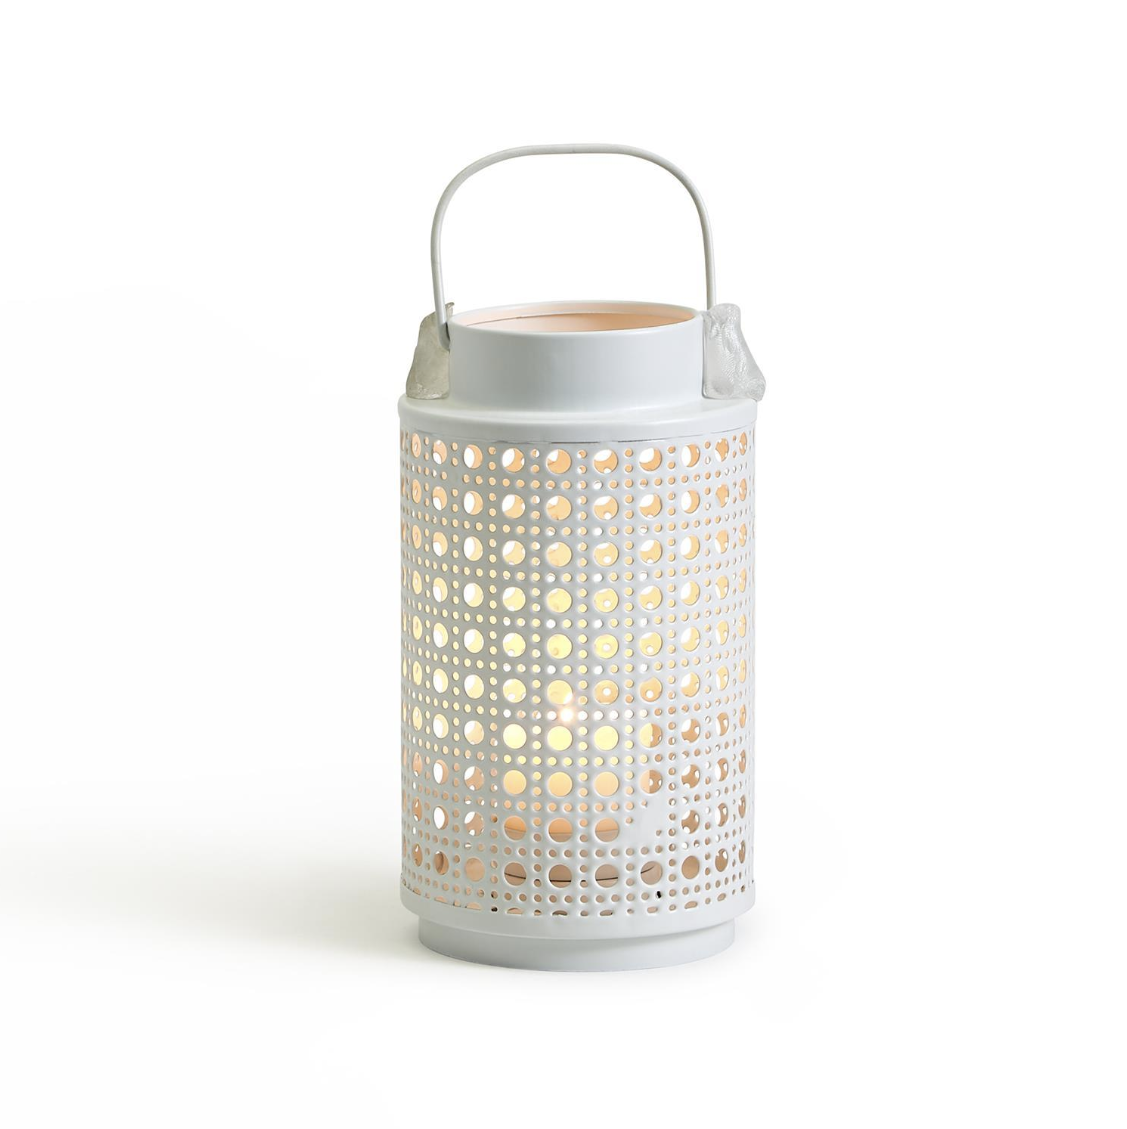 Lantern - Decorative Cane Webbing